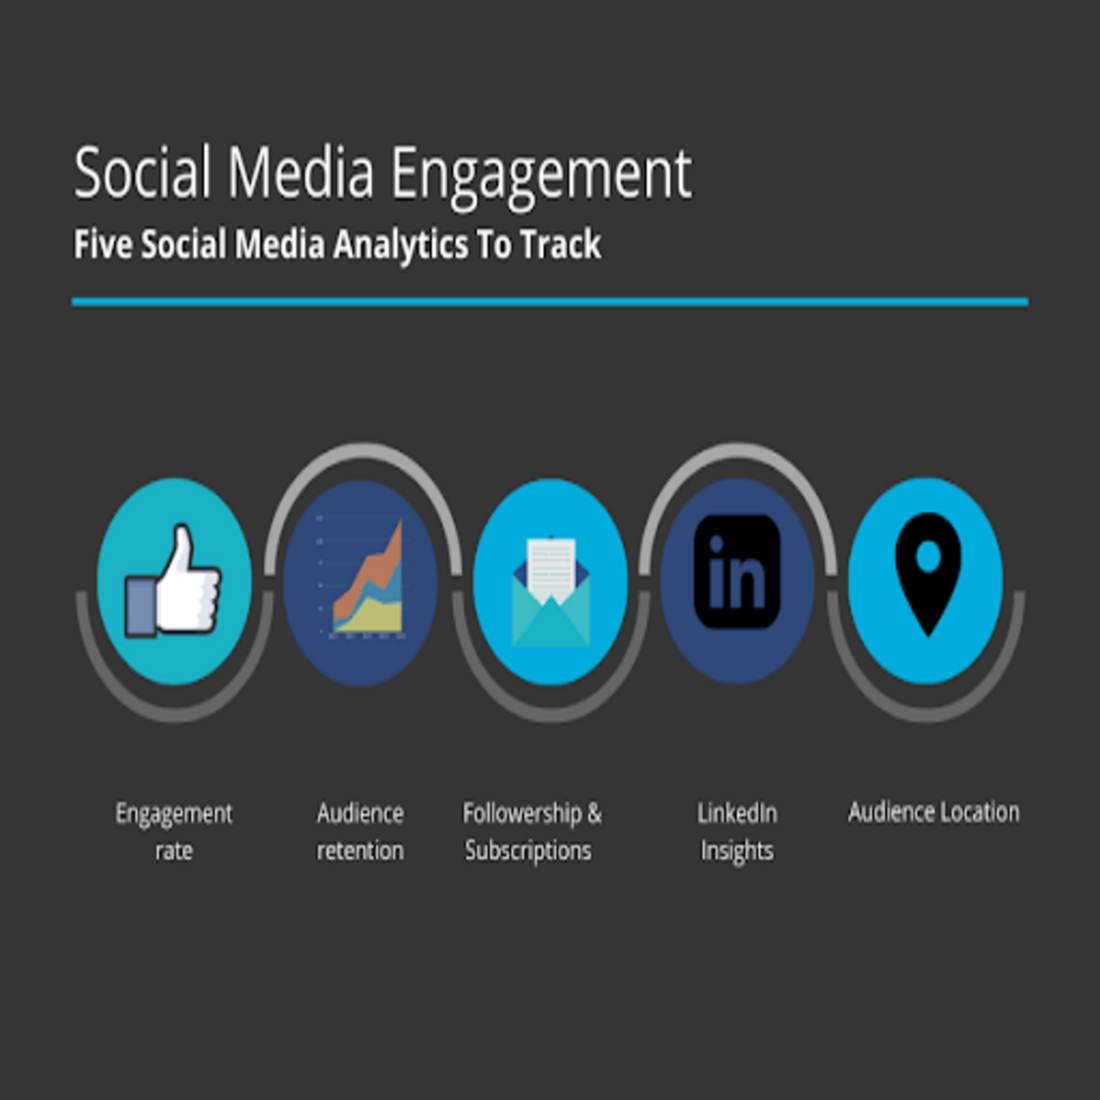 Social media analytics: the top 5 metrics to track